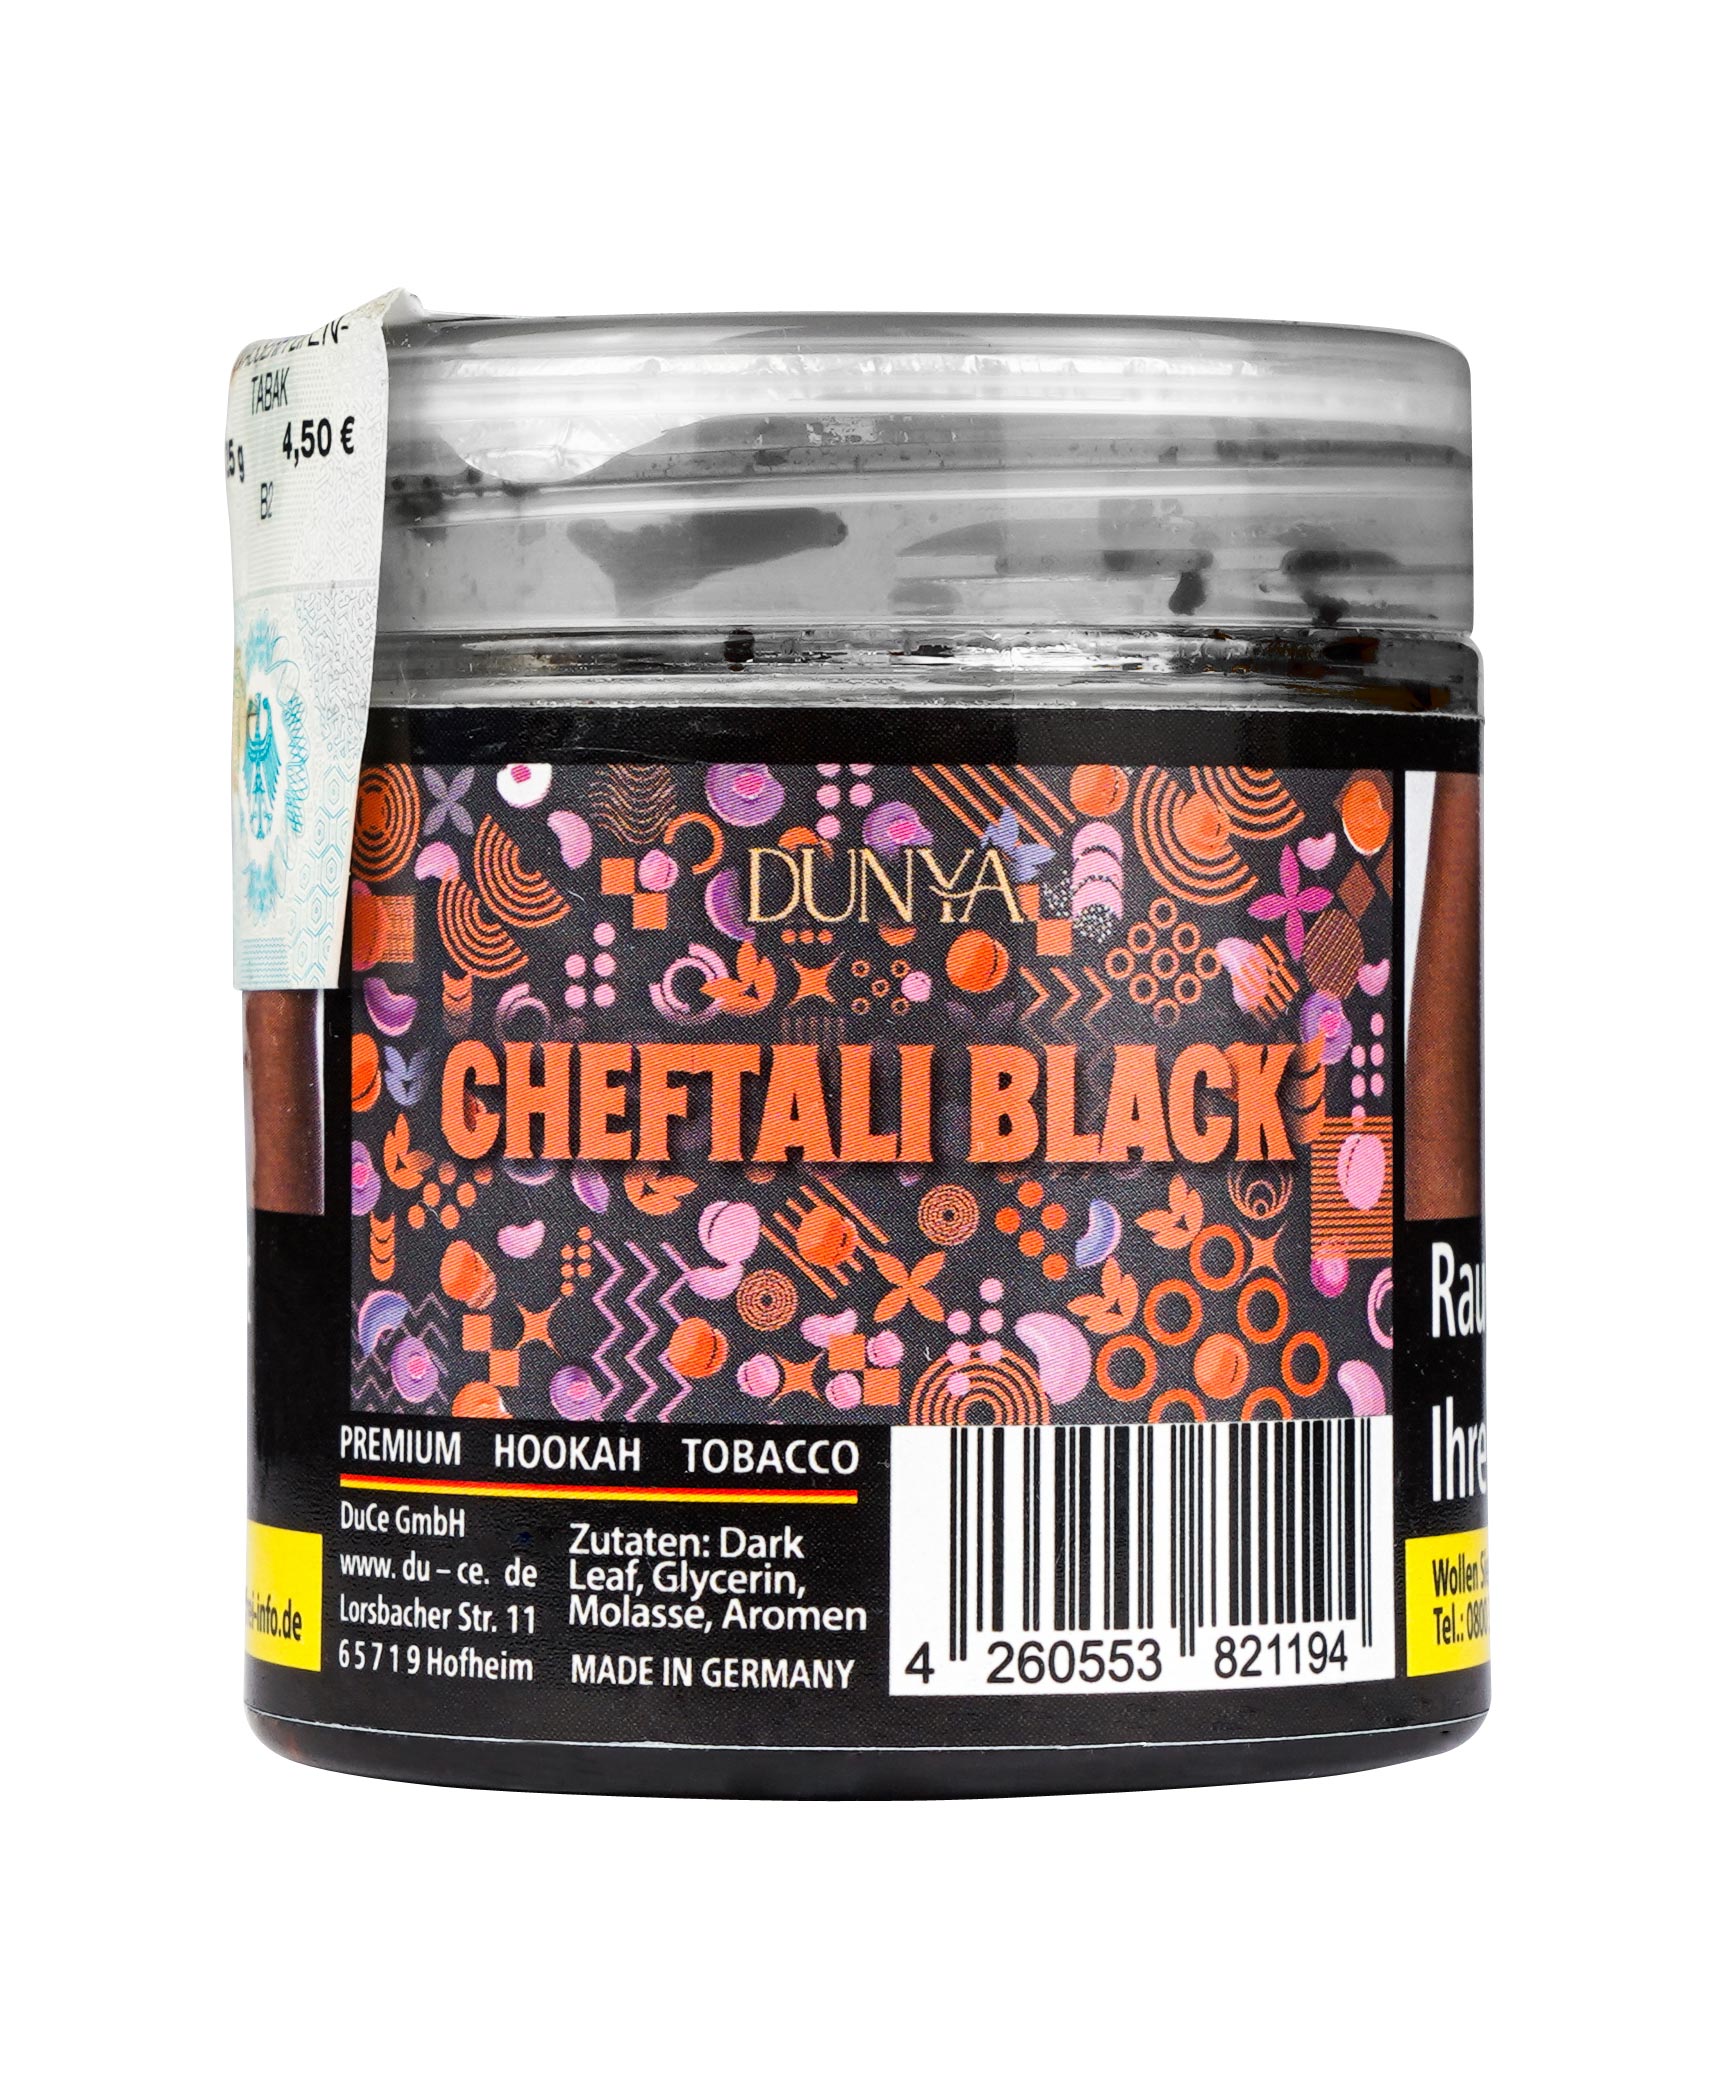 Dunya Cheftali Black 25g